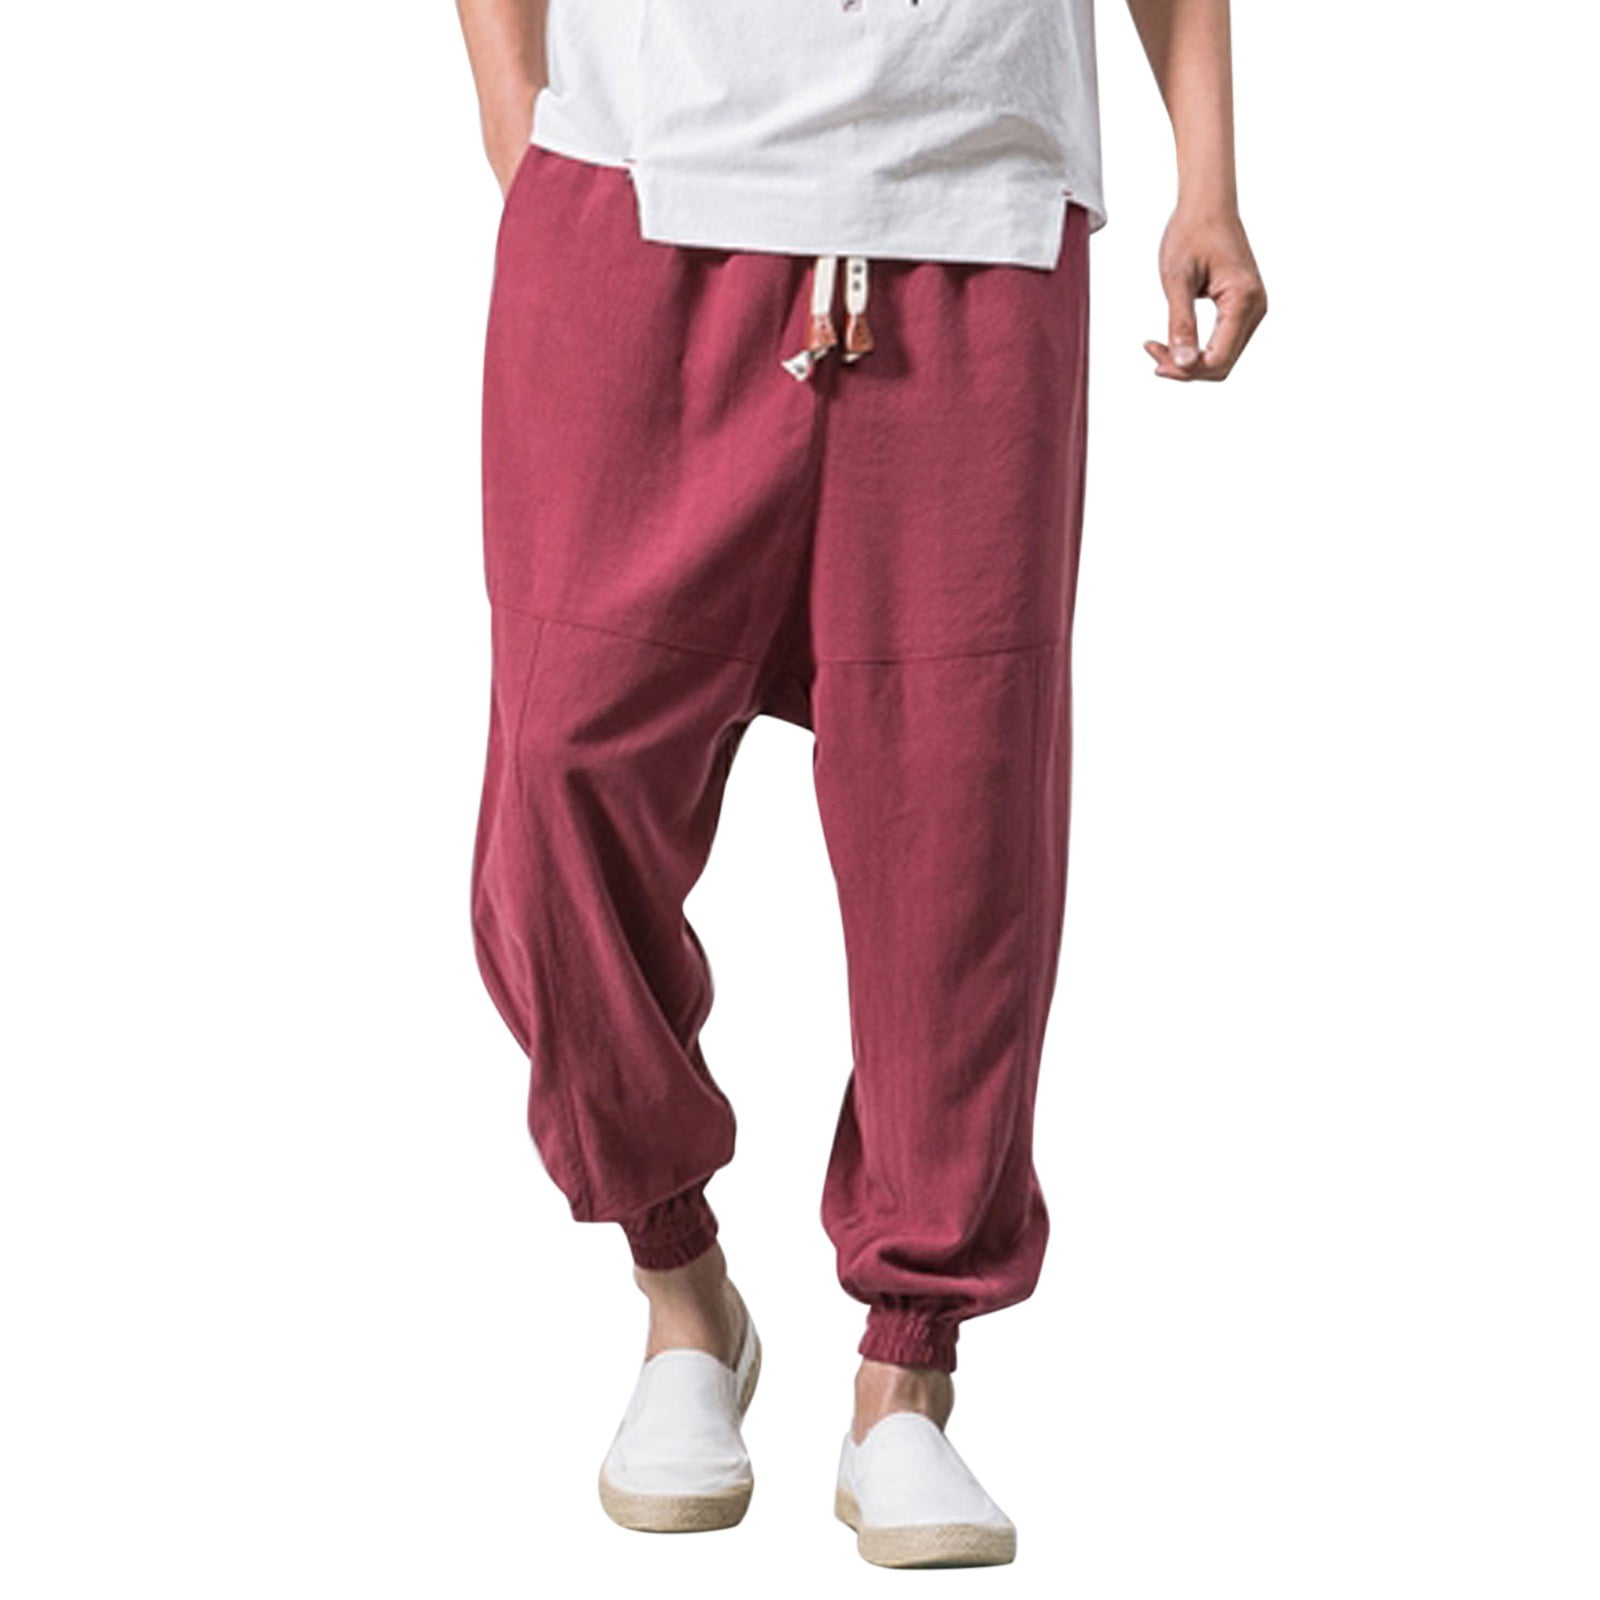 Soft Surroundings Touch of Lace Gauze straight leg cotton pants | eBay